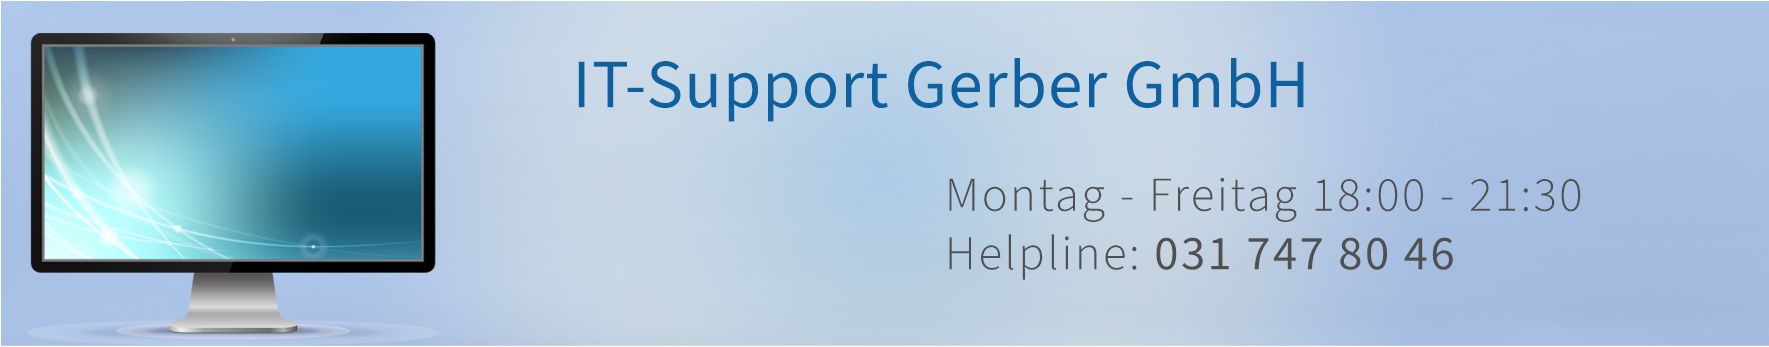 It-support Gerber